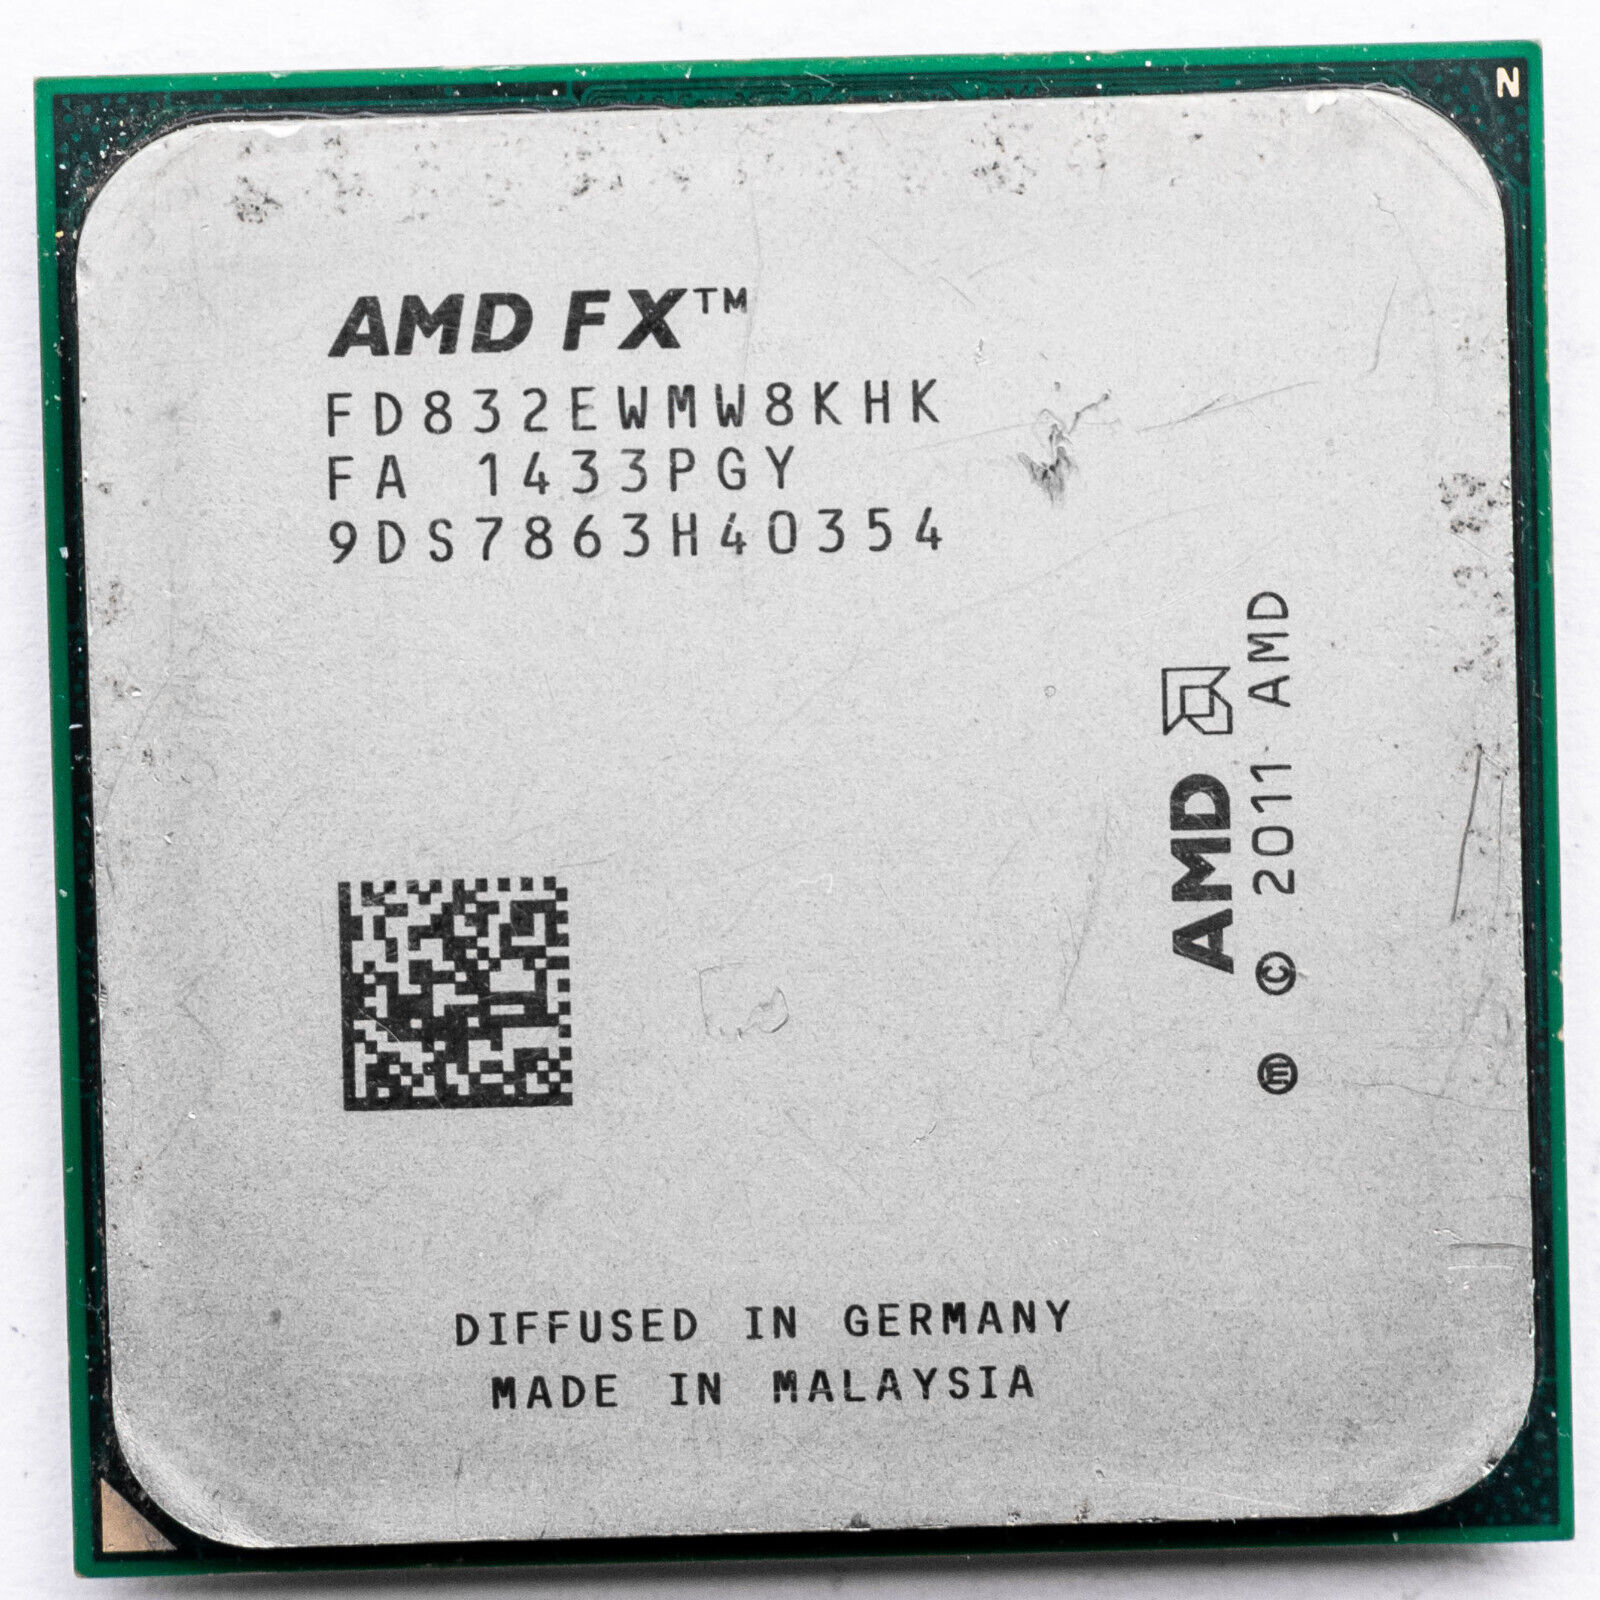 AMD FX-8320E FD832EWMW8KHK AM3+ 3.2GHz Eight Core Processor 95W 8MB Vishera